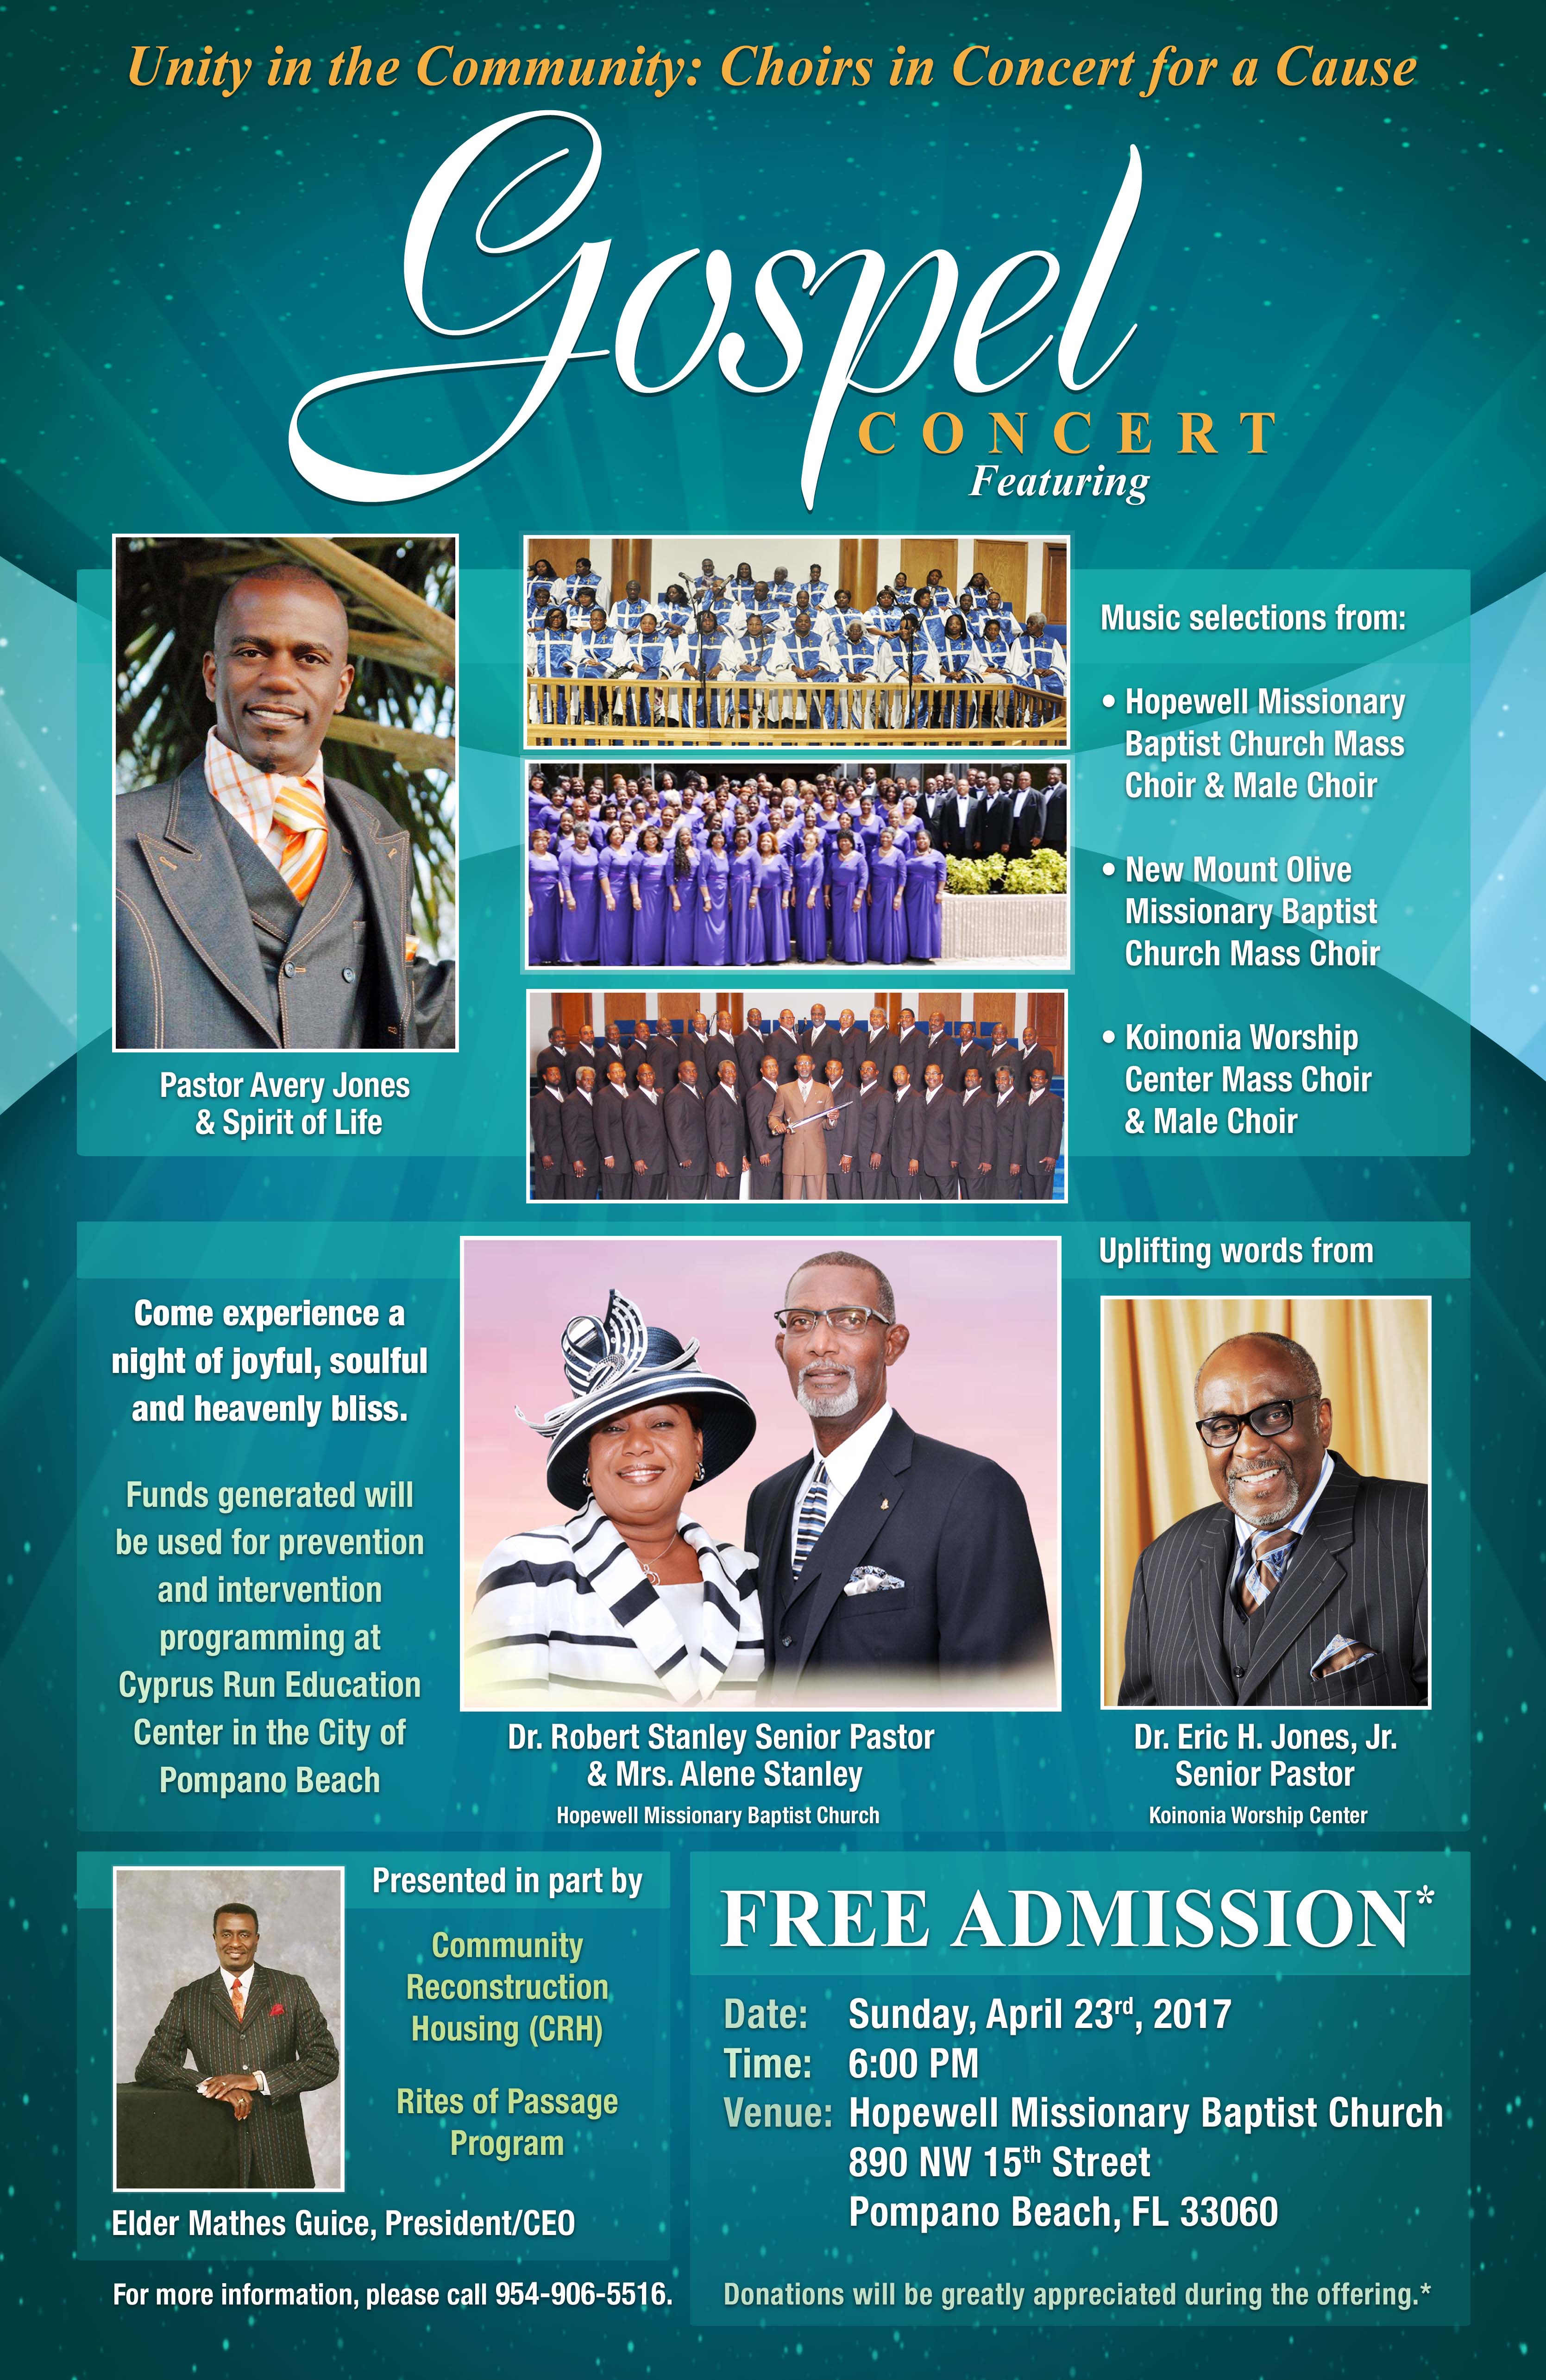 Free Gospel Concert set for April 23rd with renowned Gospel Artist